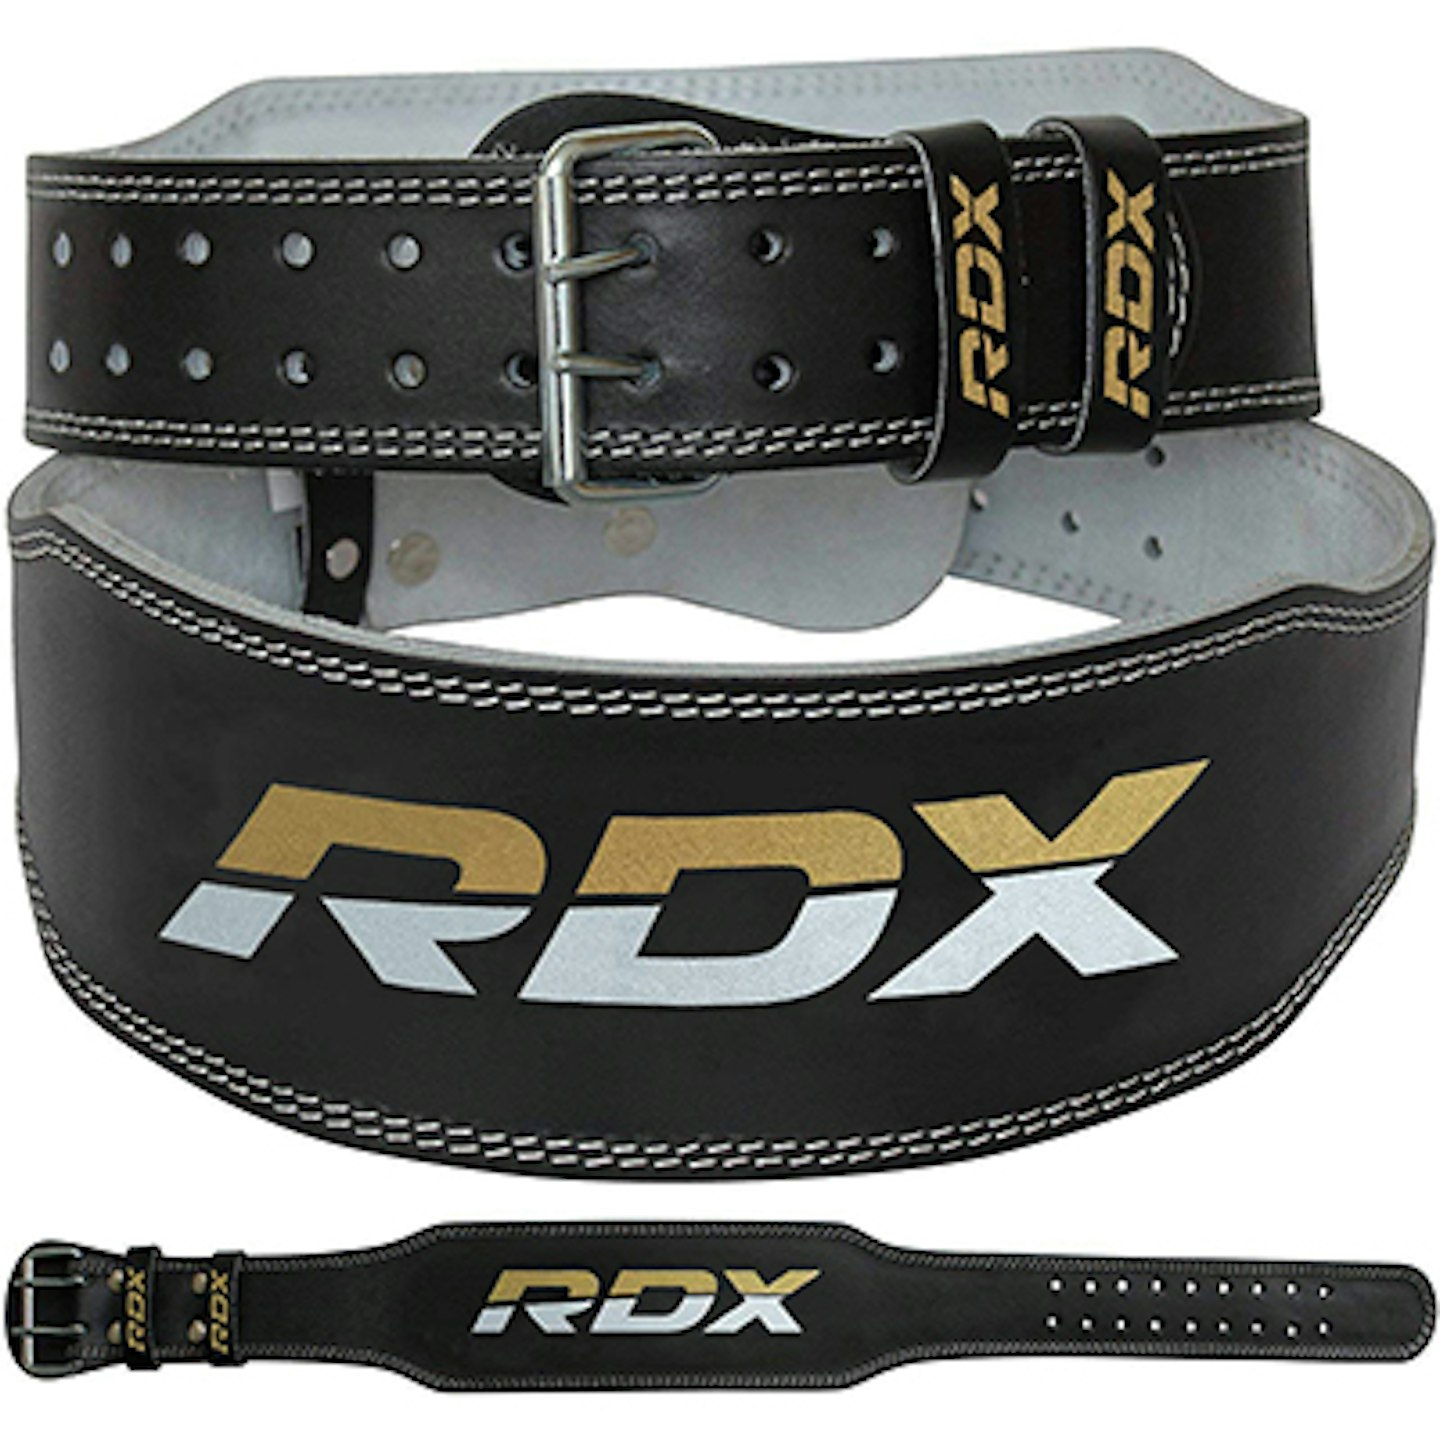 RDX weightlifting belt